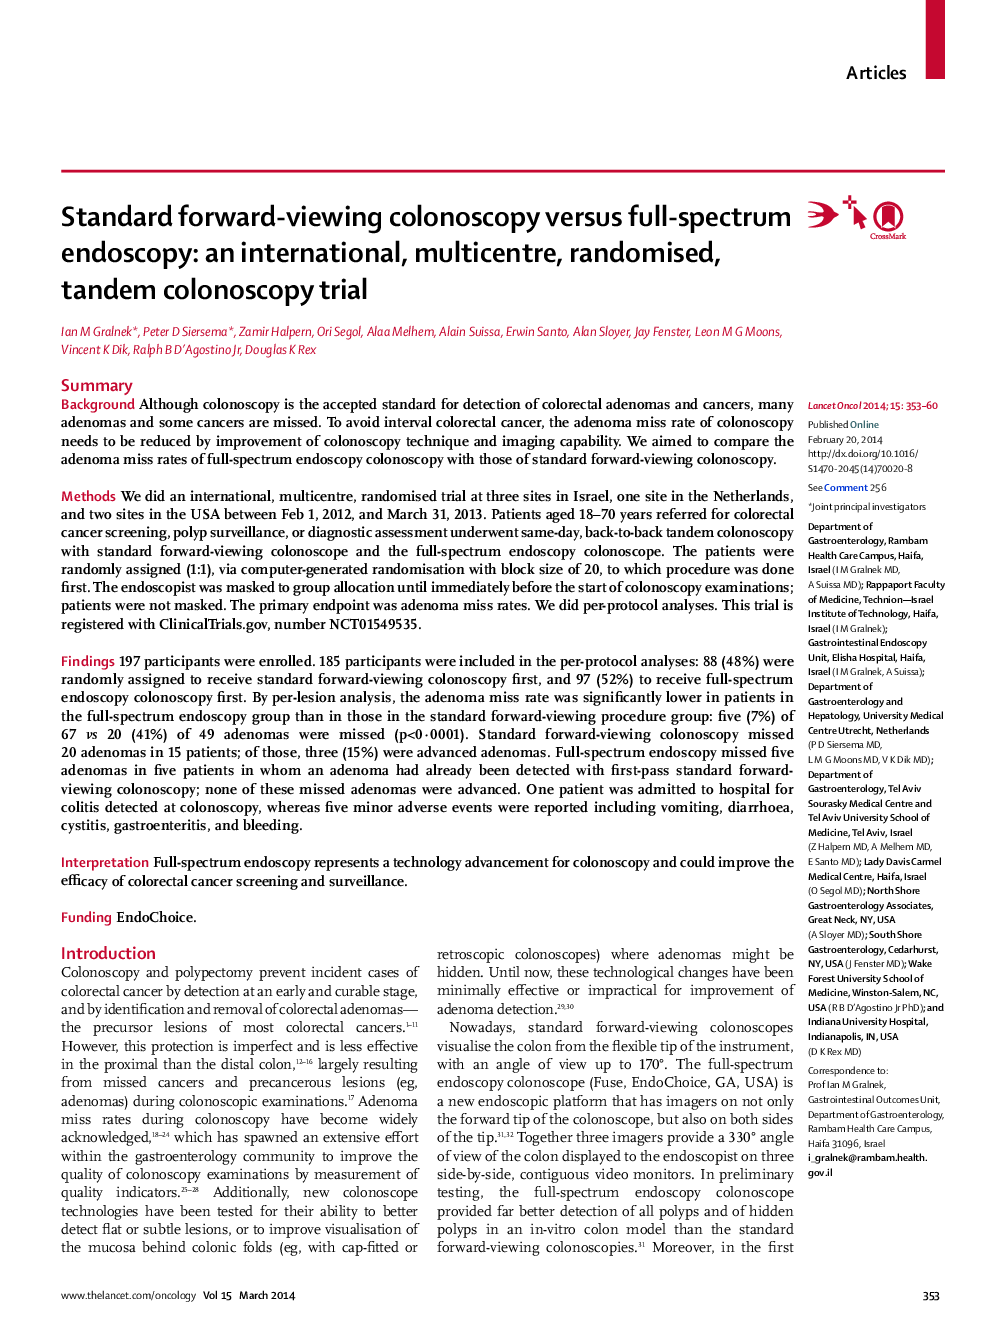 Standard forward-viewing colonoscopy versus full-spectrum endoscopy: an international, multicentre, randomised, tandem colonoscopy trial